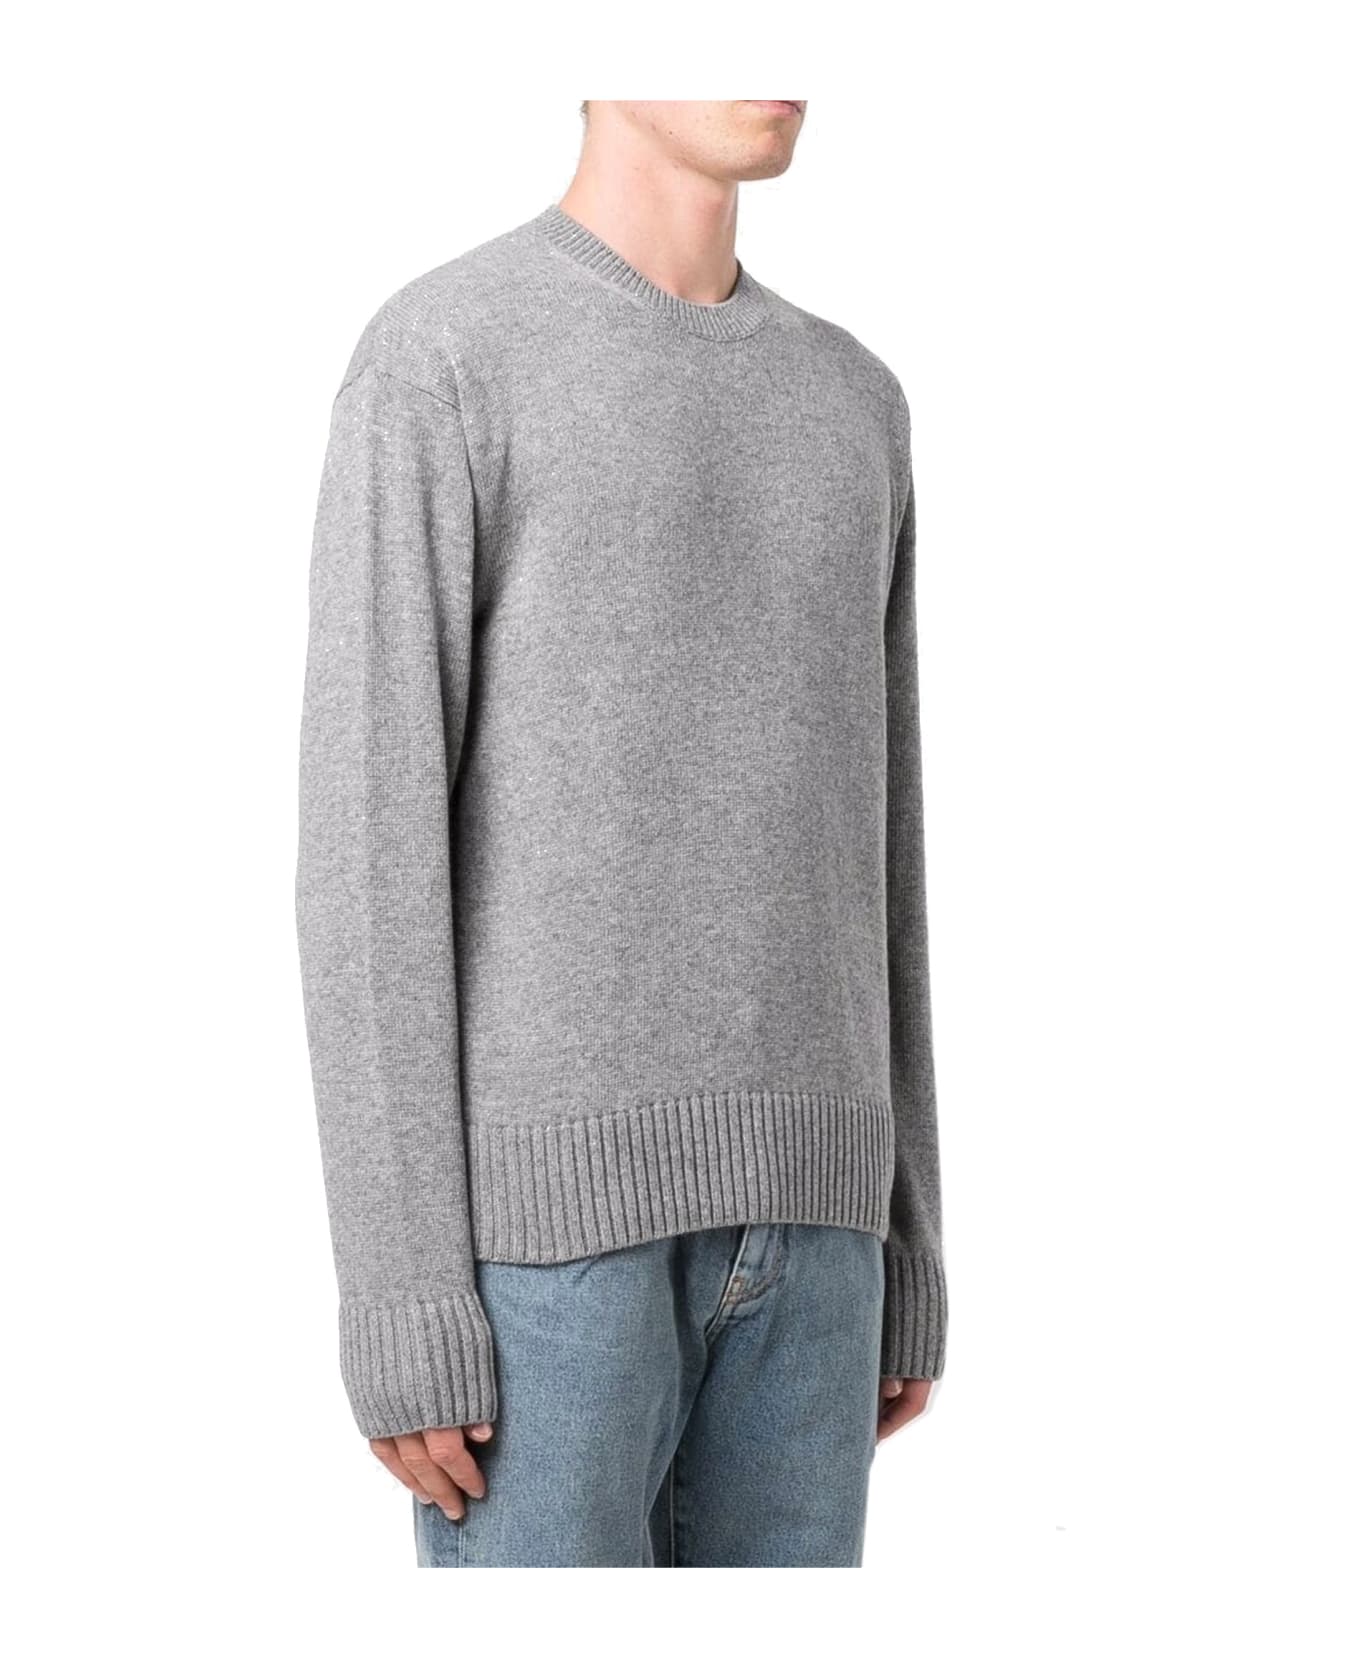 Off-White Crew Neck Sweater - Gray